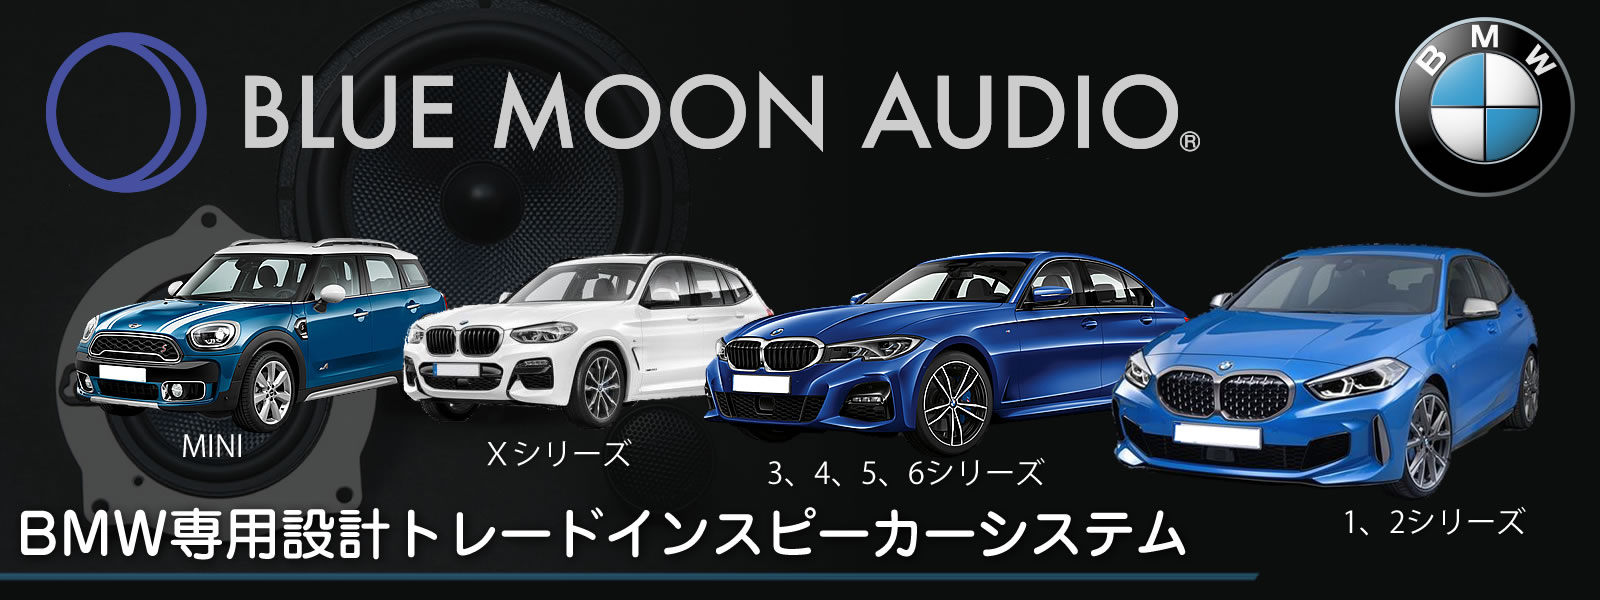 BLUE MOON AUDIO BMW専用システム